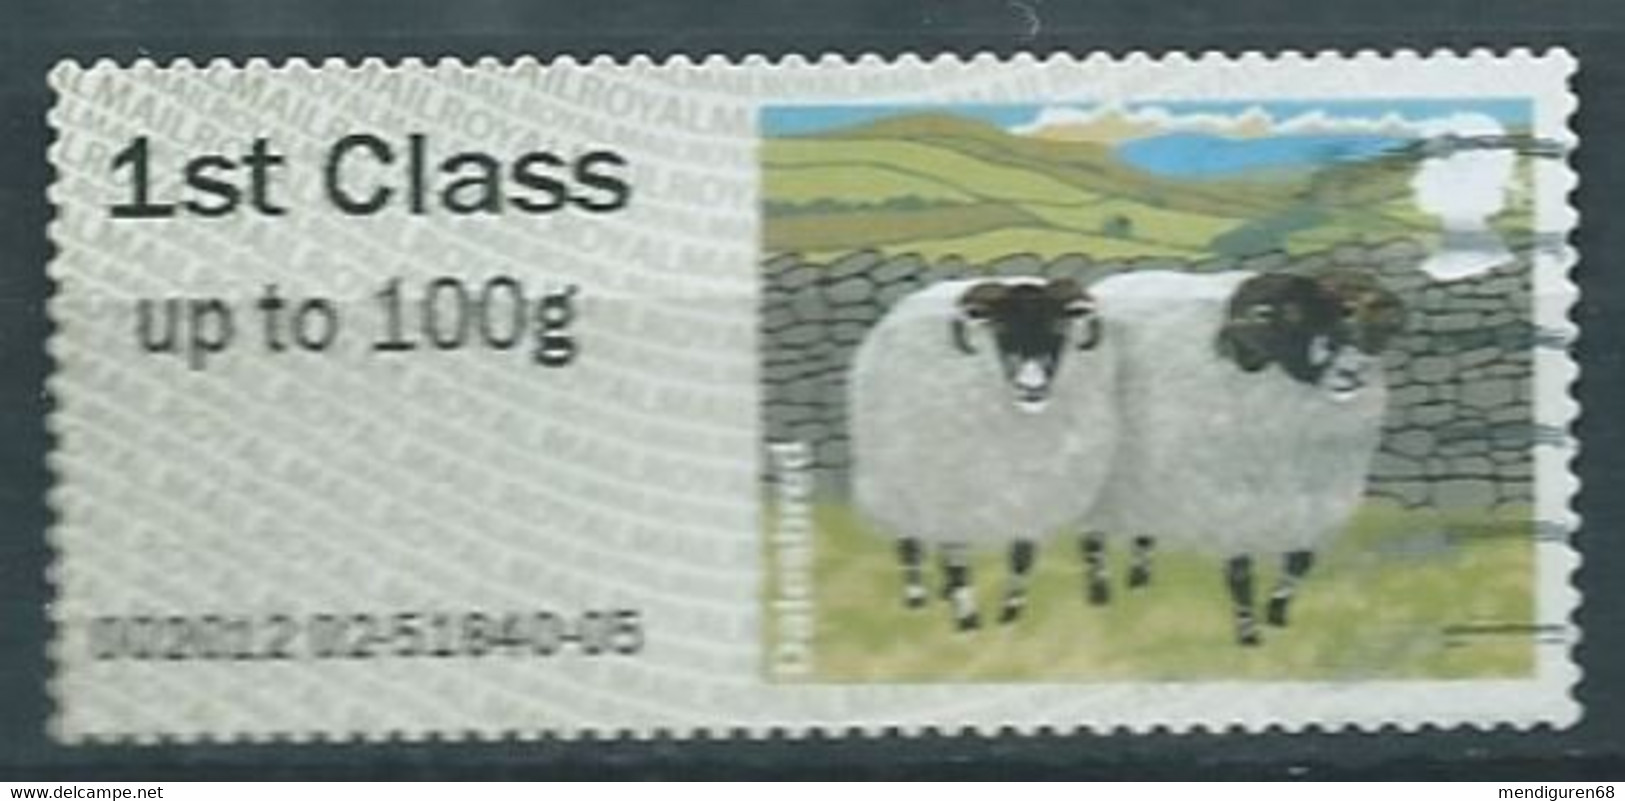 GROSBRITANNIEN GRANDE BRETAGNE GB 2012 POST&GO SHEEP:DALESBRED 1ST CLASS Up To 10g USED PAPER SG TD 30 MI ATM 2 YT TD28 - Post & Go (distributeurs)